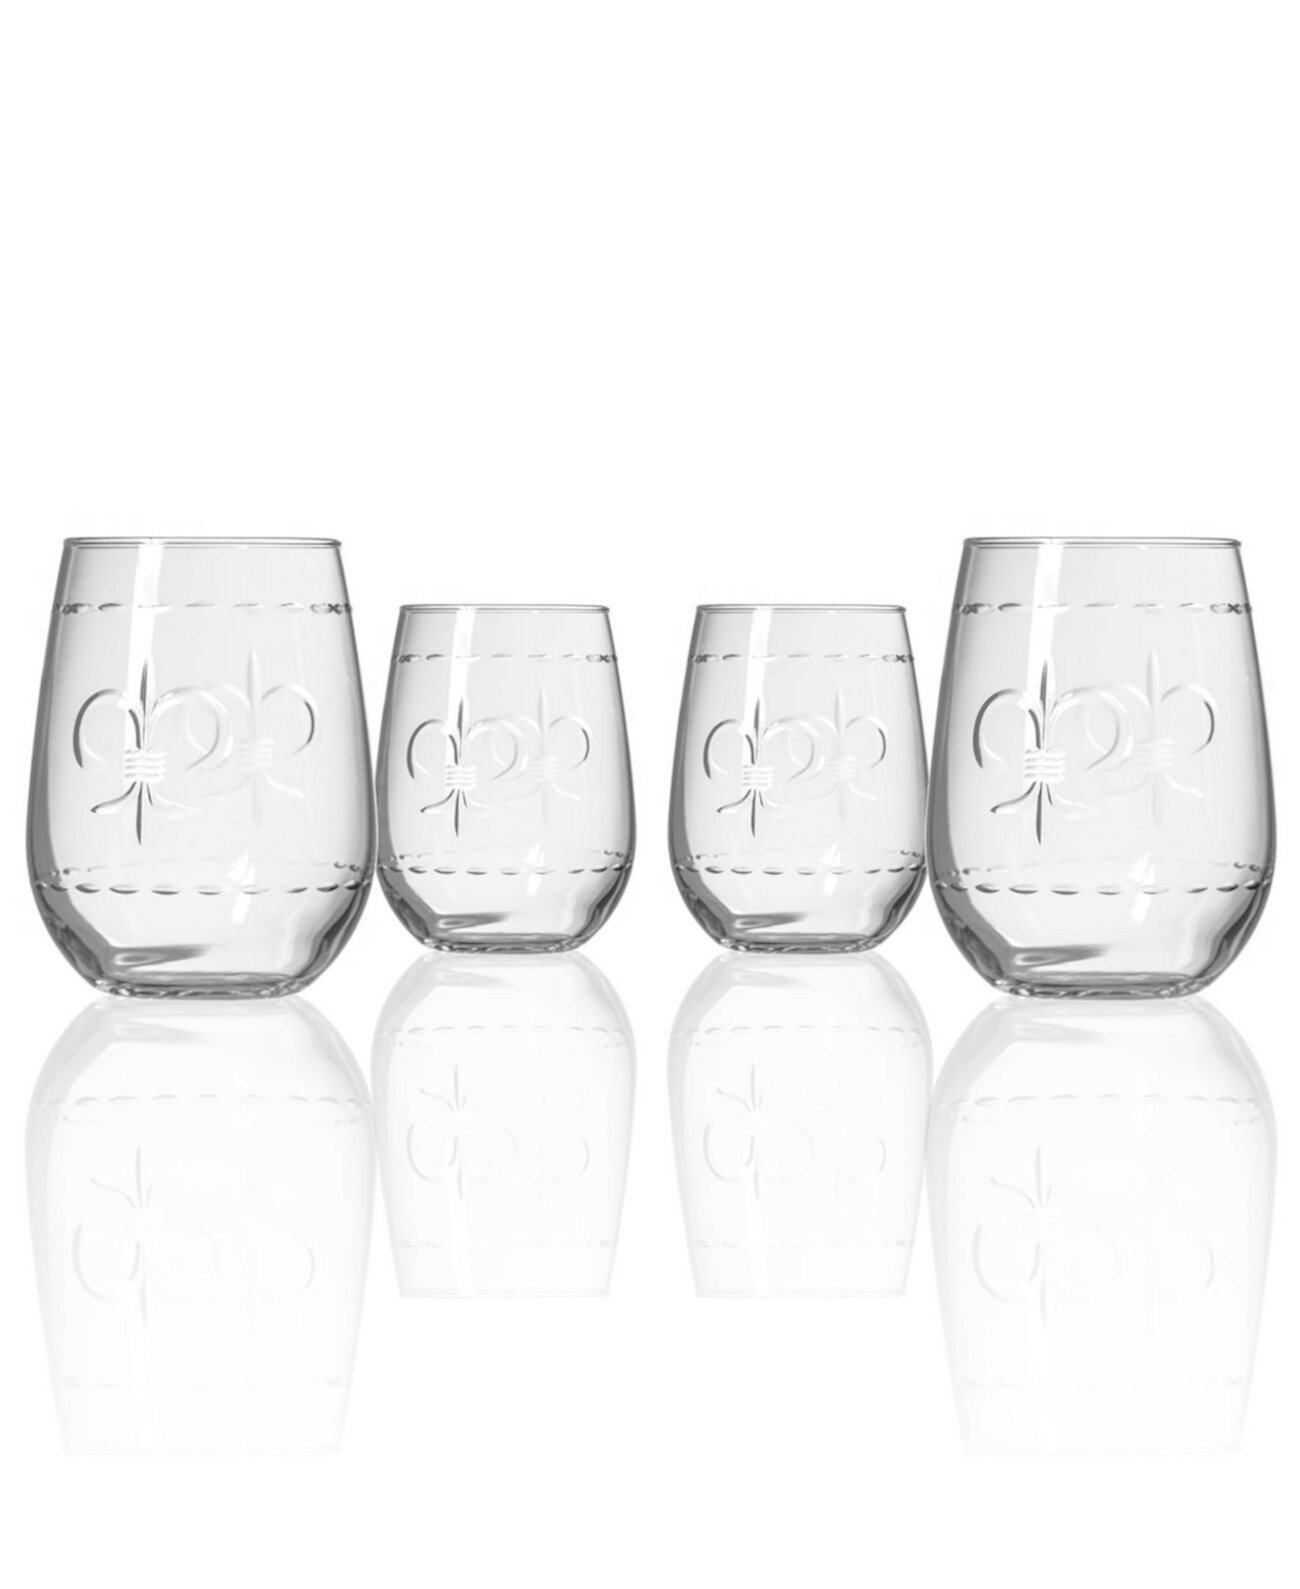 Стакан для вина без ножки Fleur De Lis на 17 унций - набор из 4 бокалов Rolf Glass